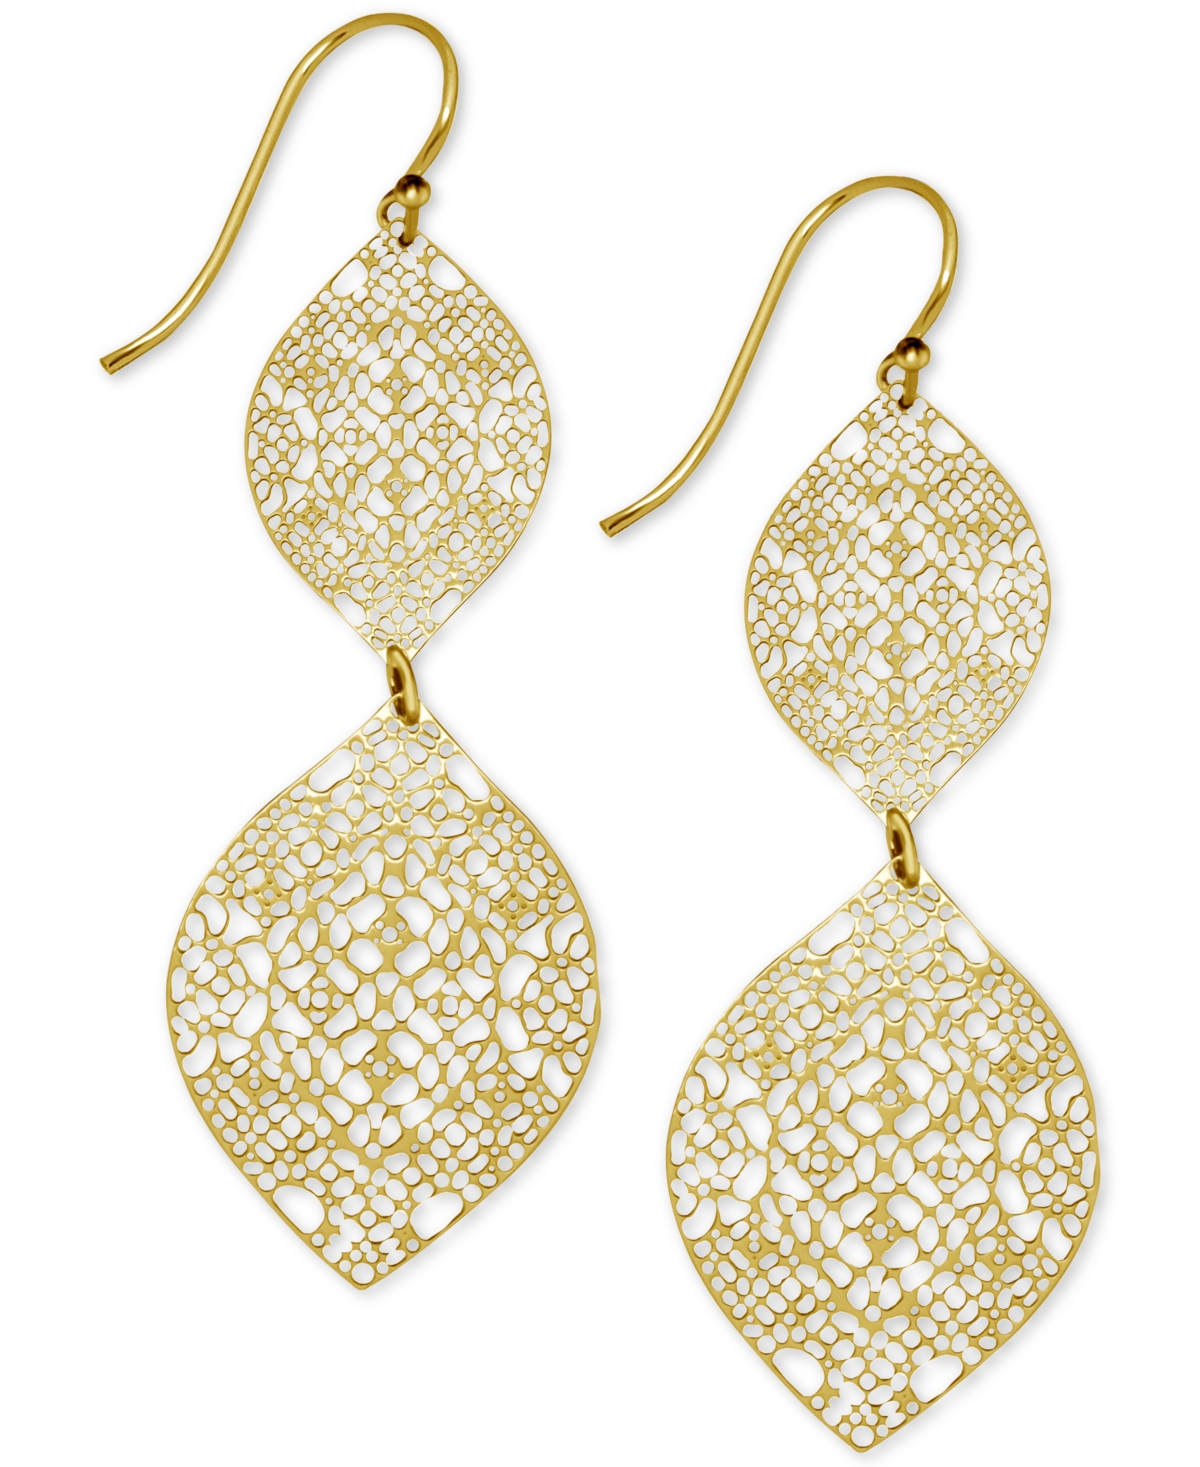 Filigree Double Drop Earrings in Gold-Plate - Gold